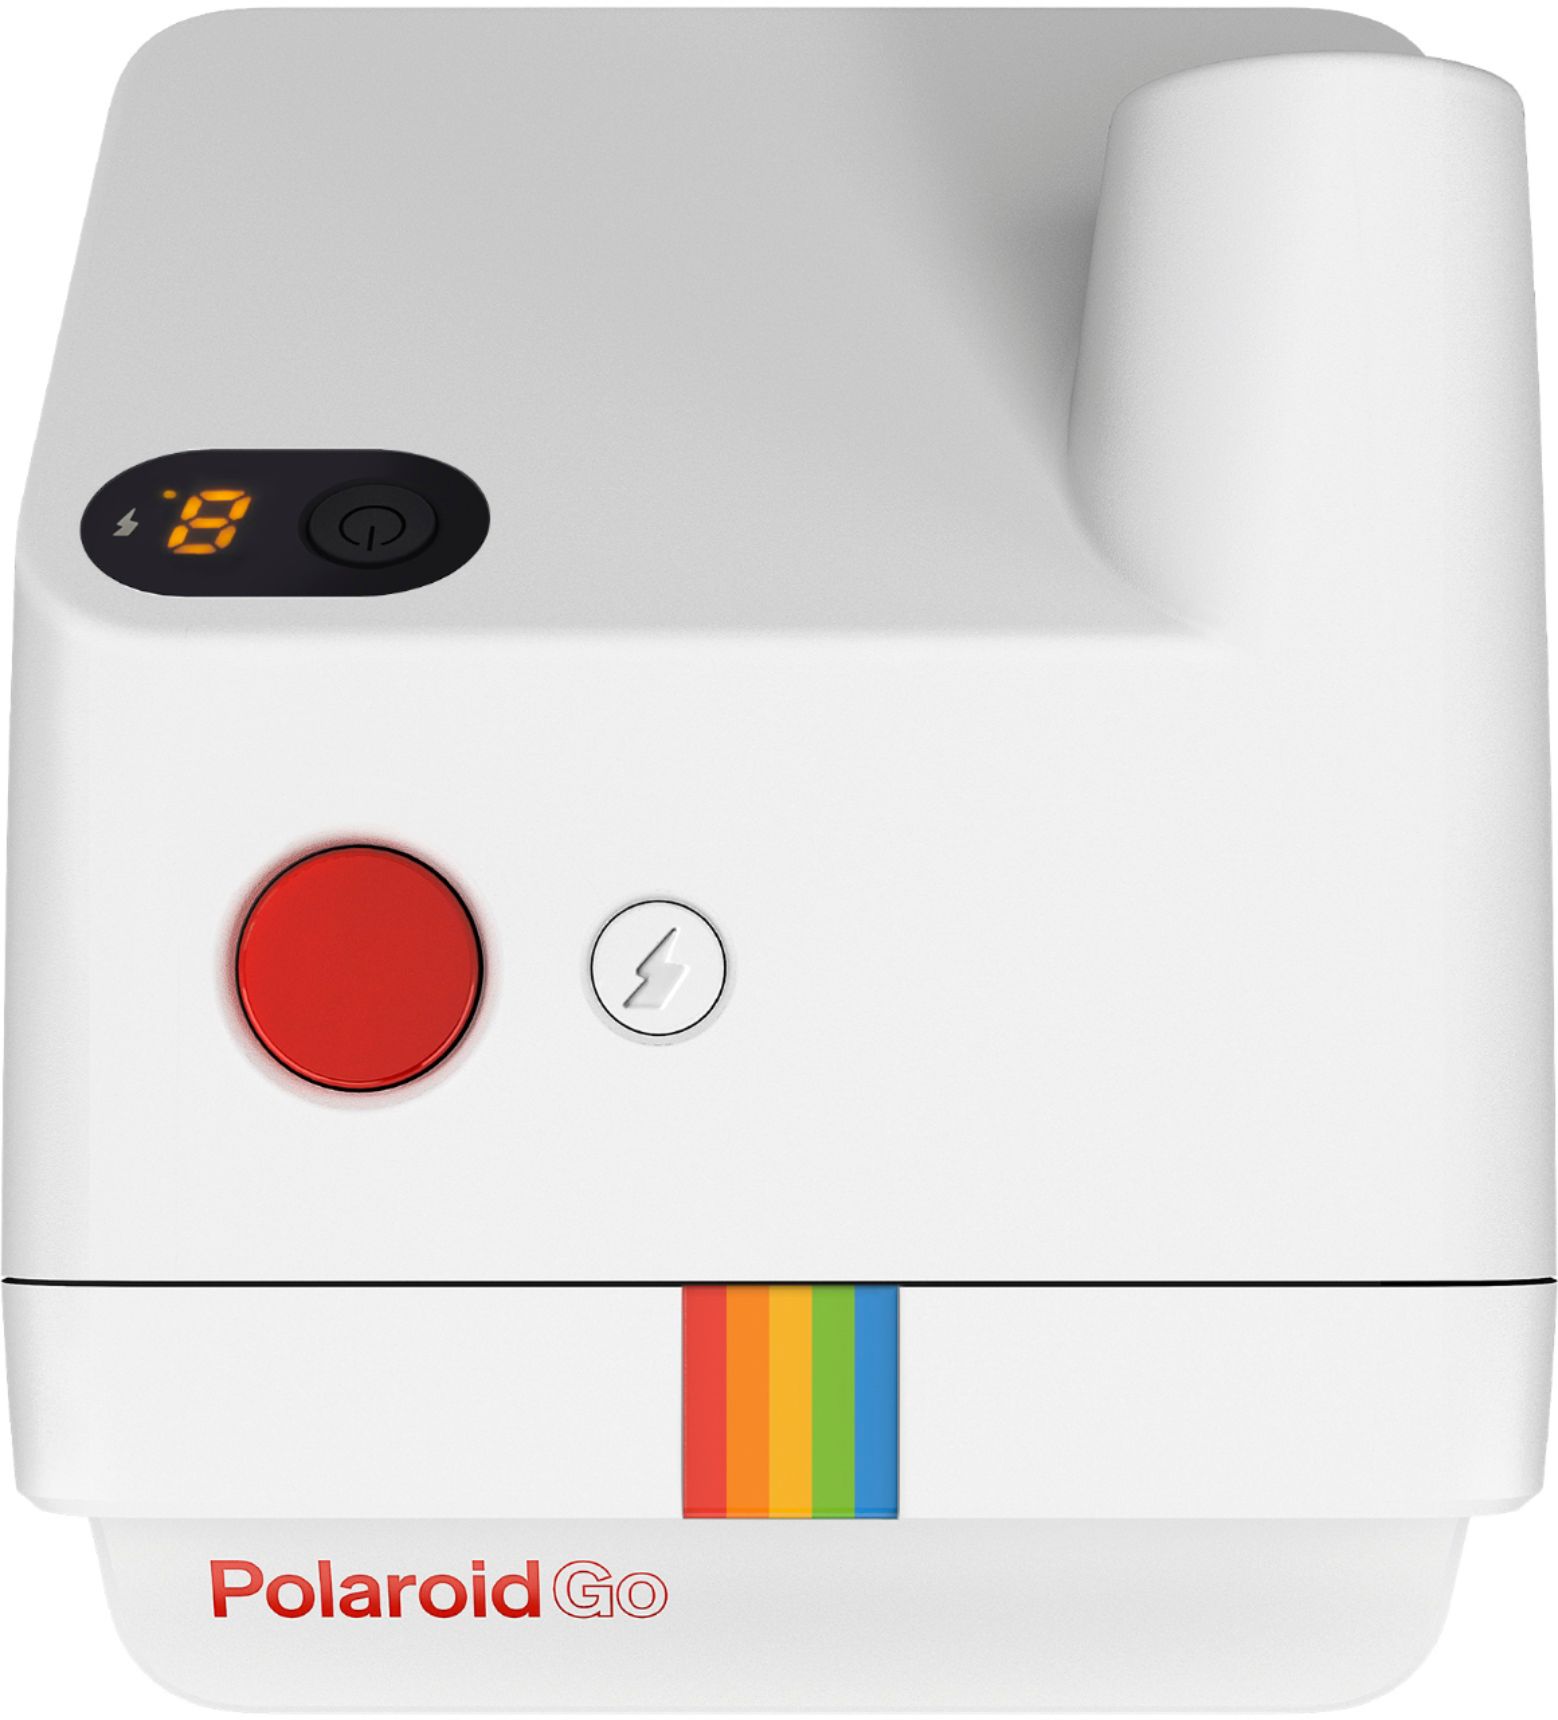 Polaroid Instant GO prezzo